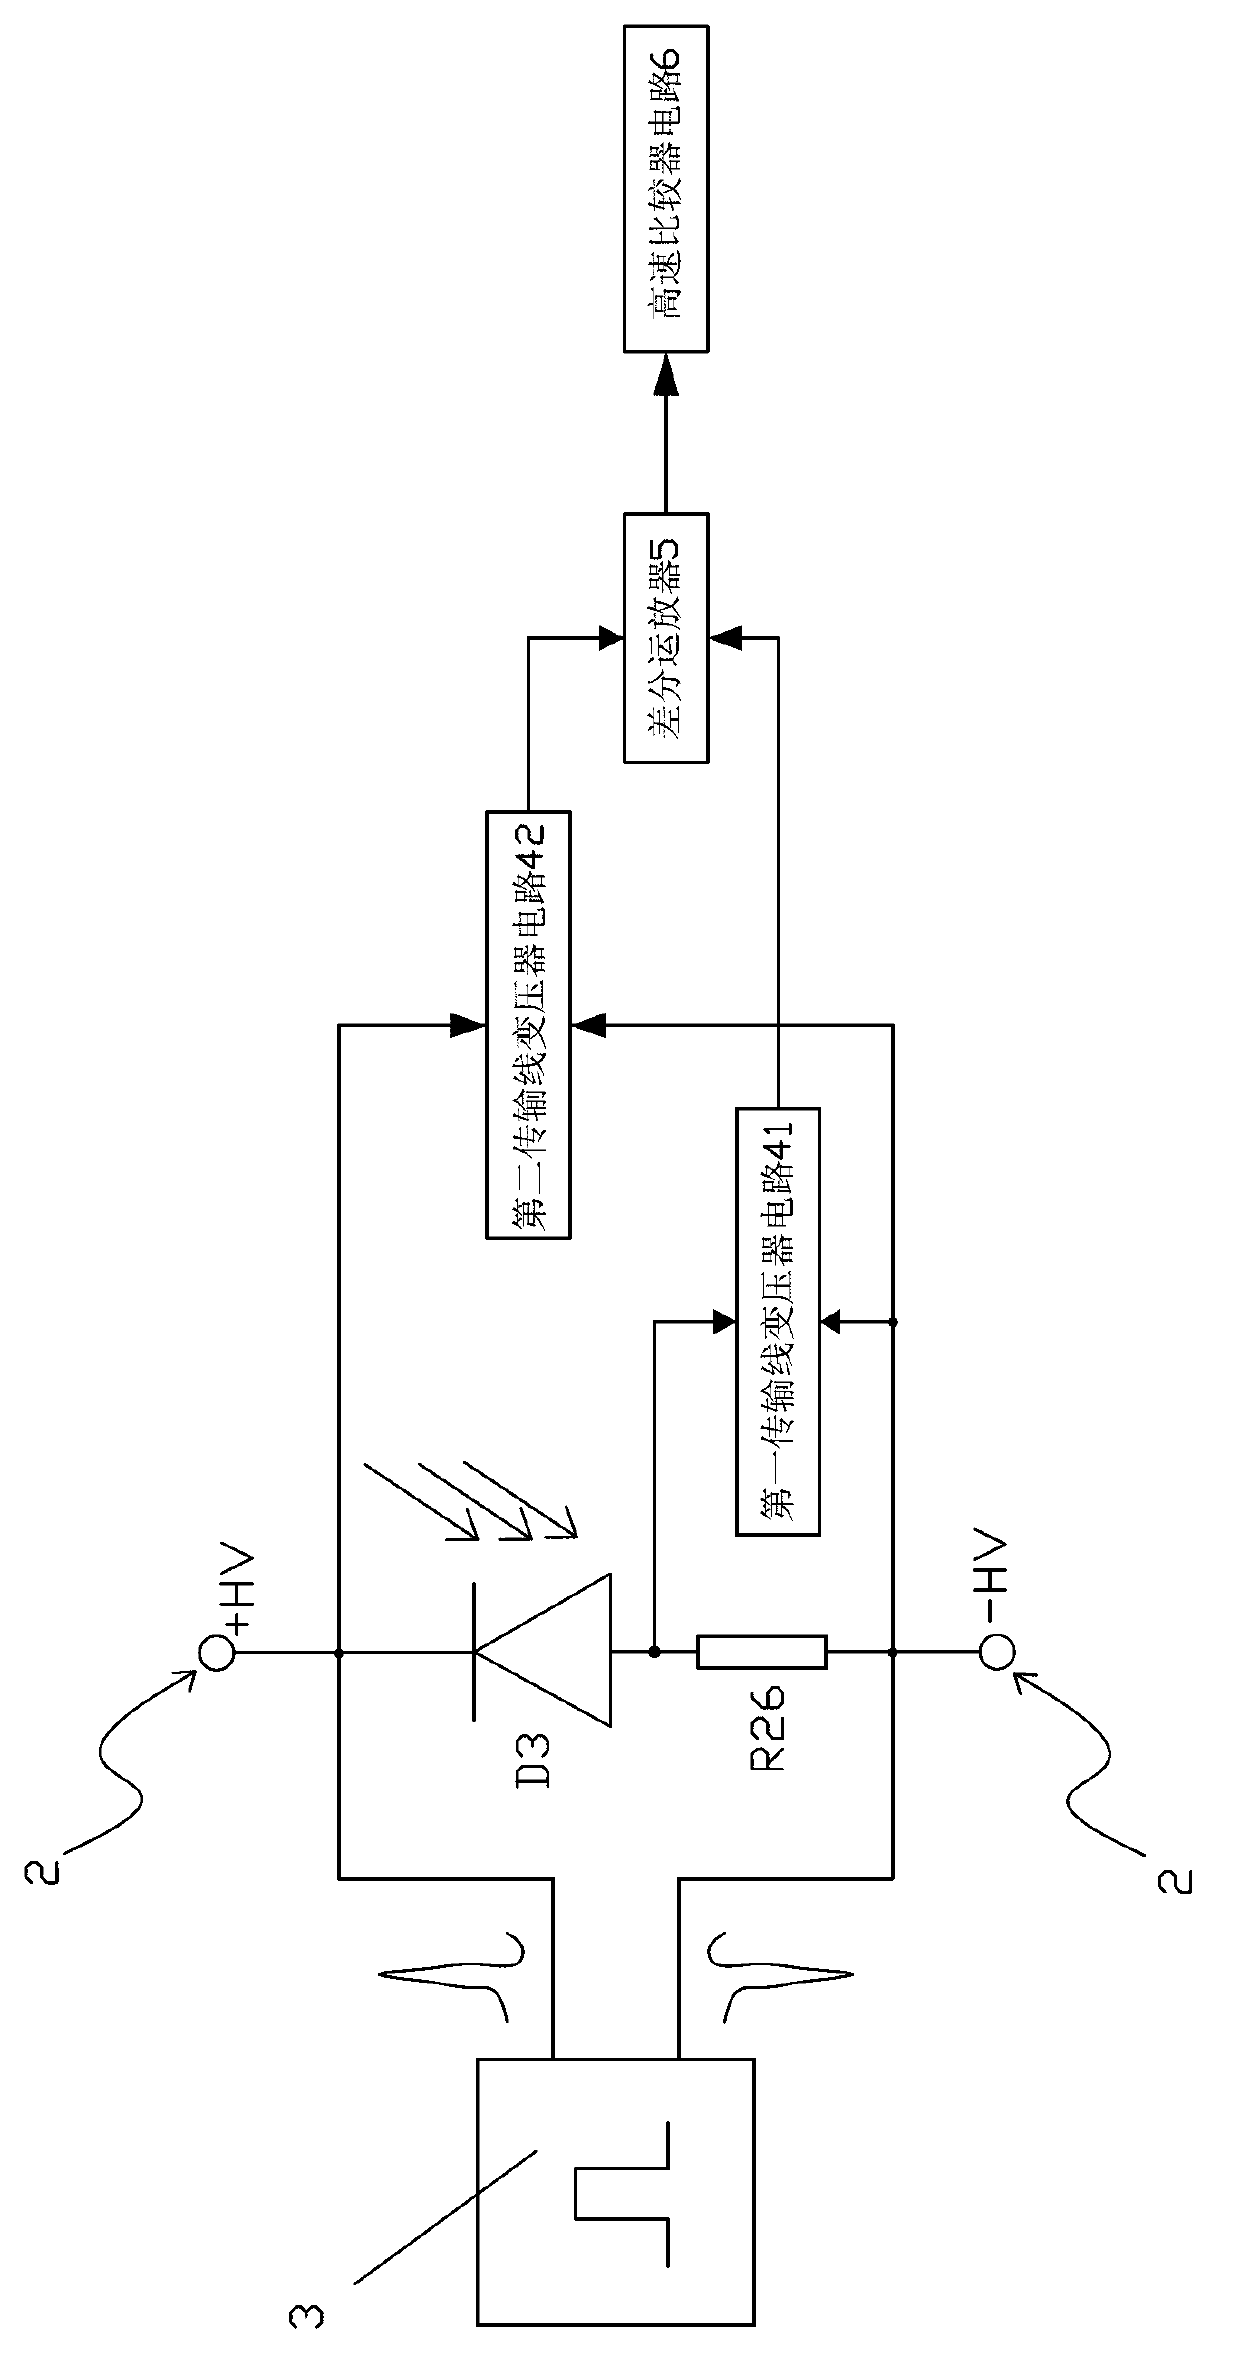 Bipolar bias avalanche photo diode (APD) single photon detection system